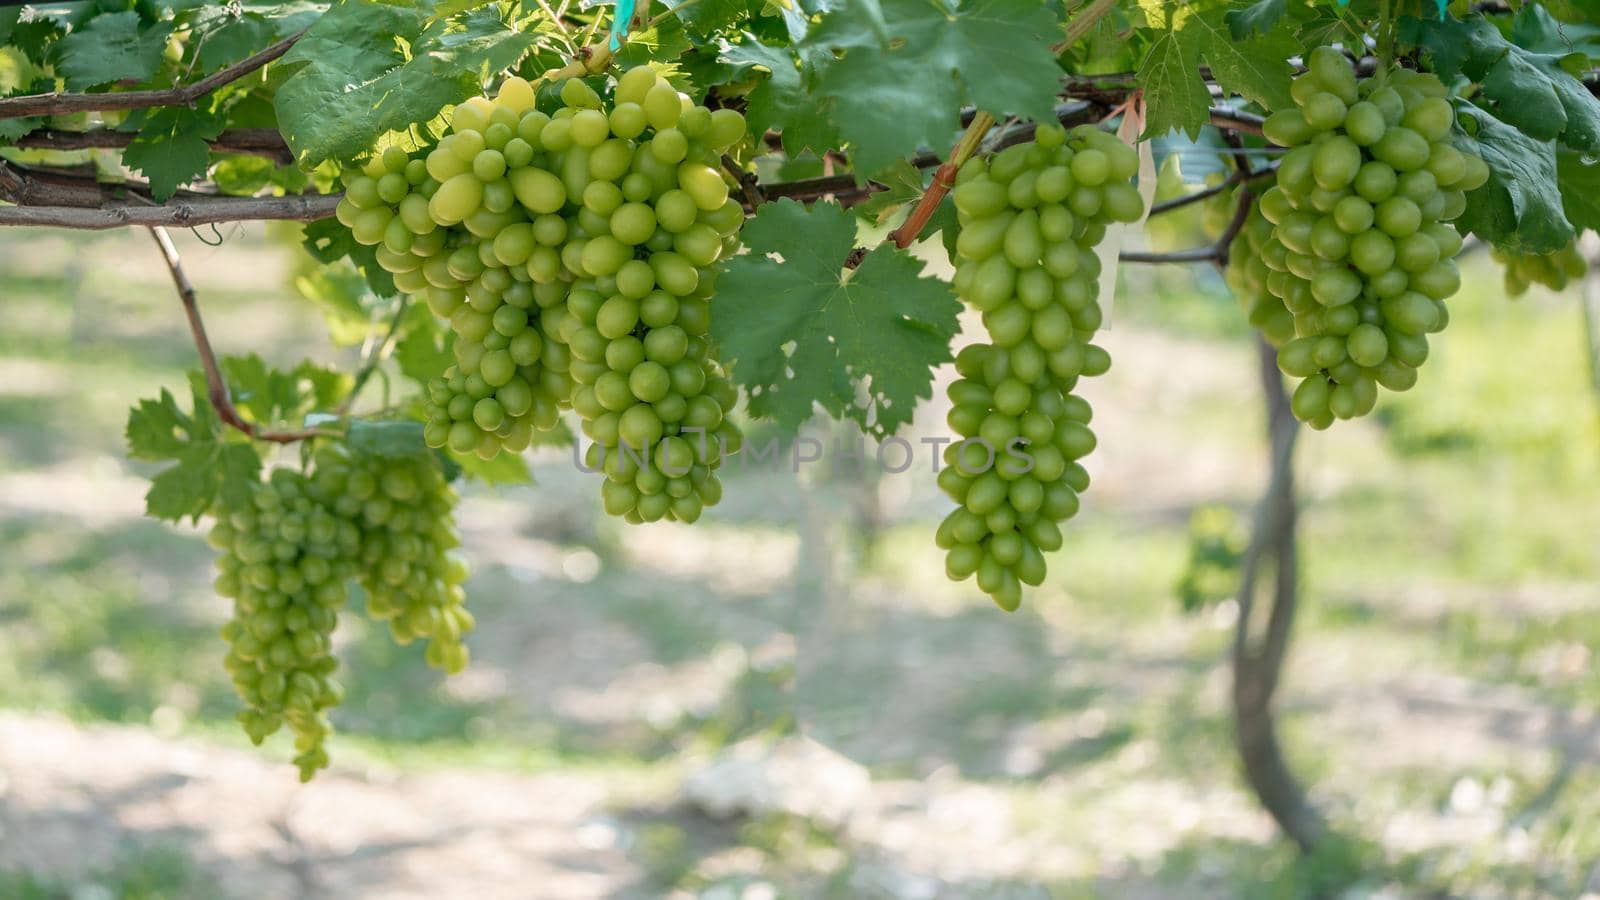 Green grapes in vineyard.